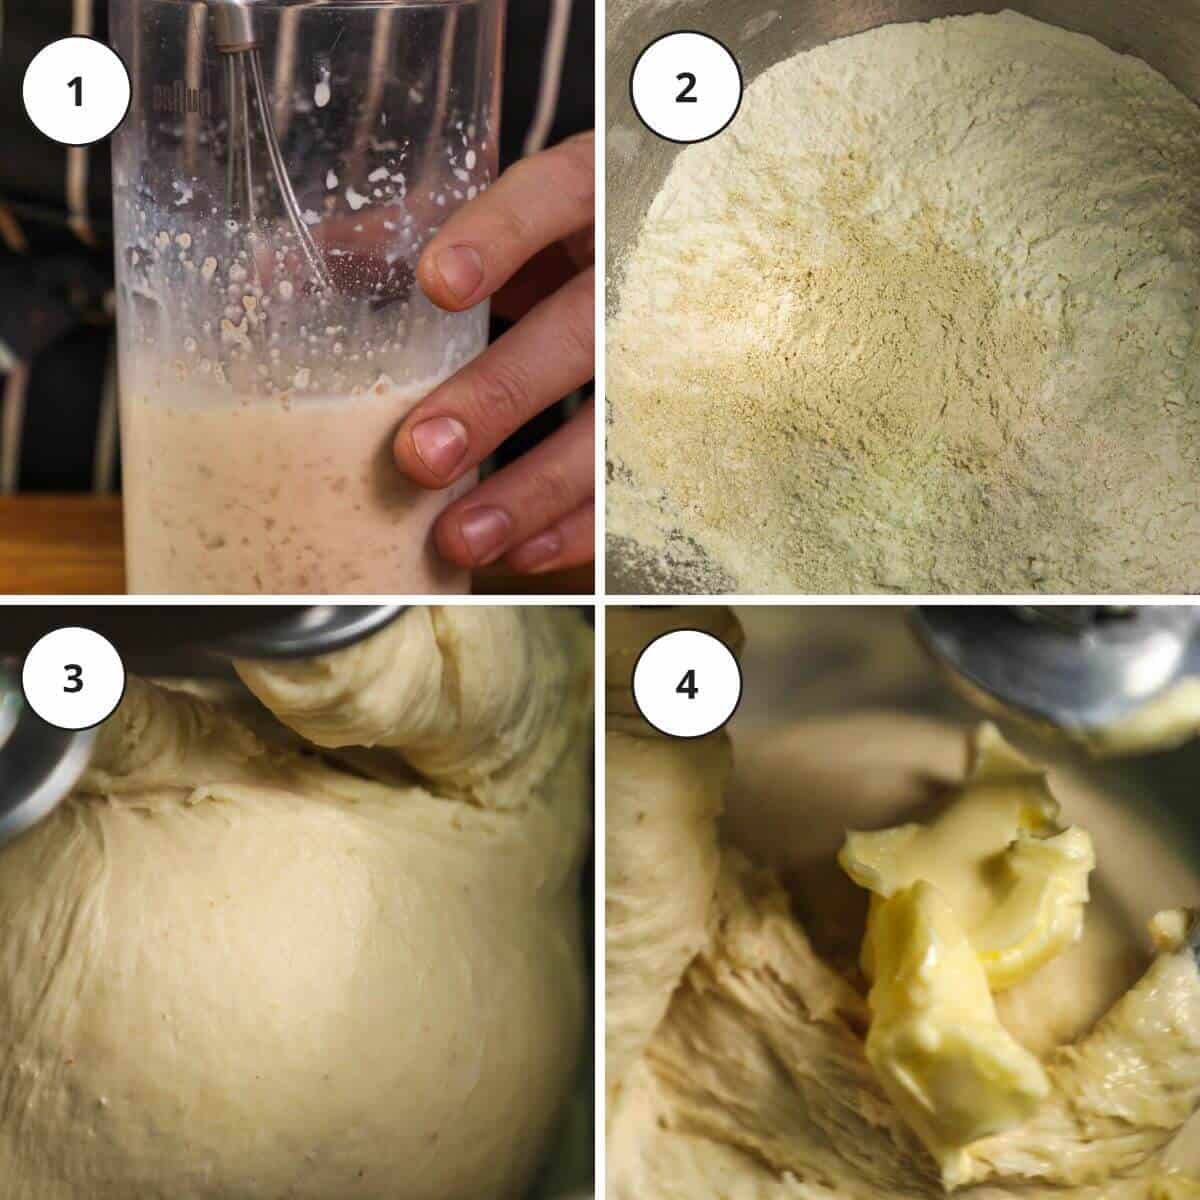 Steps for mixing milk bun dough.